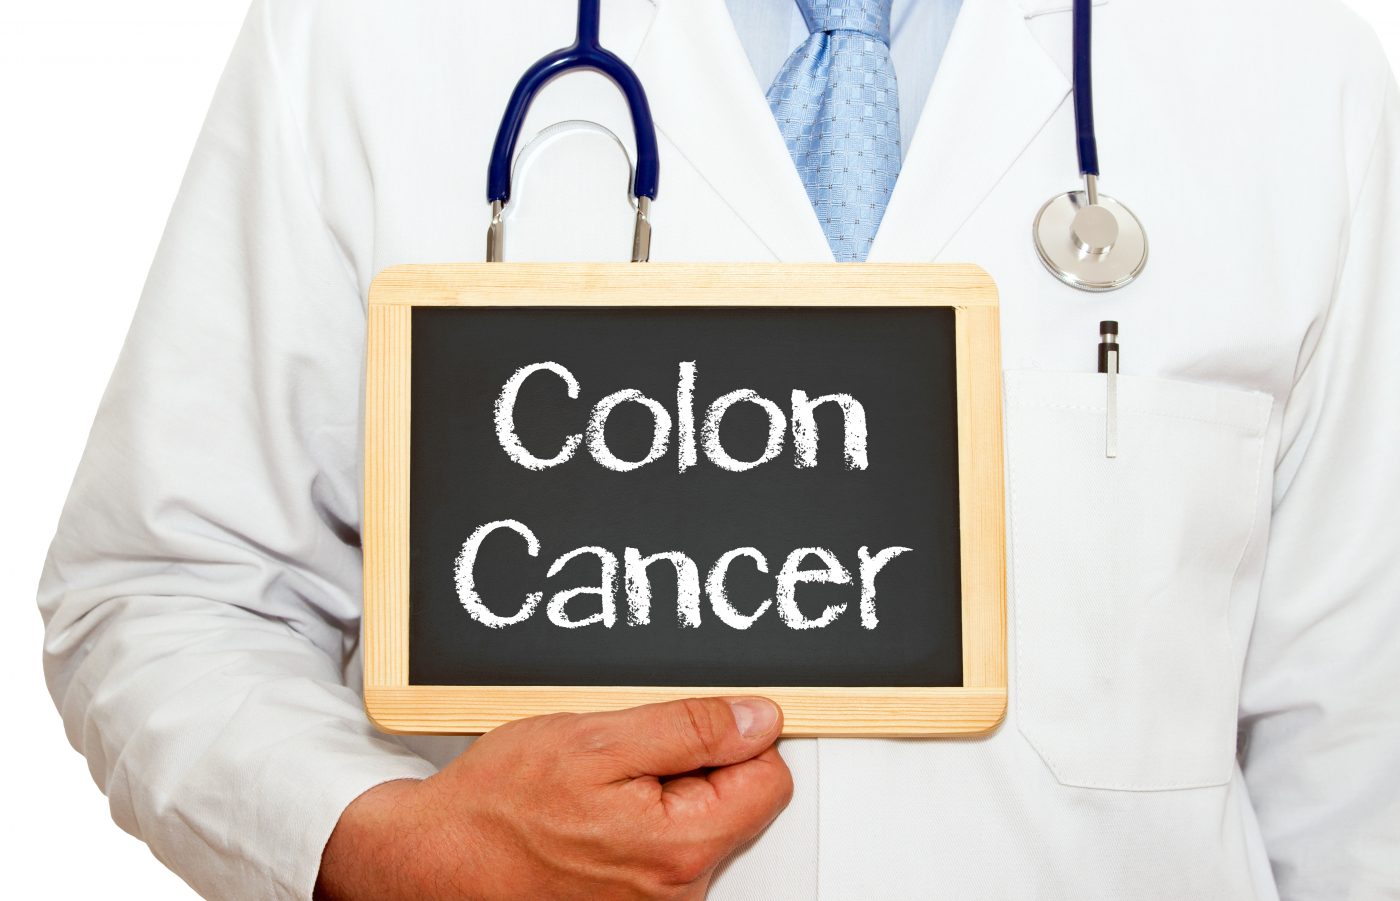 Key factors in colon cancer screening